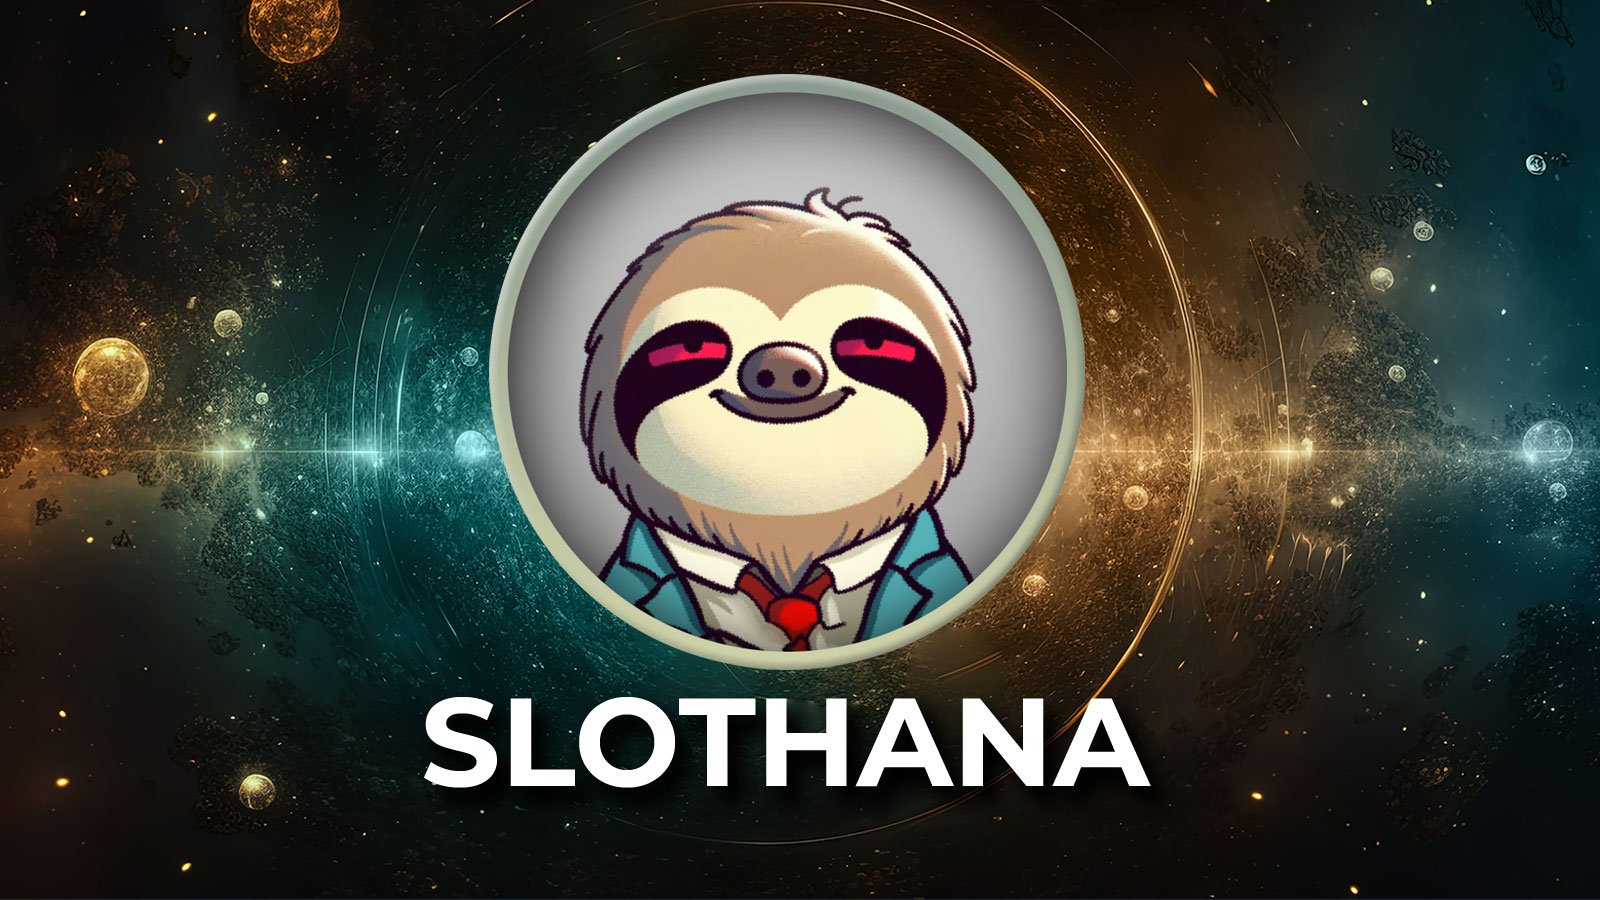 Slothana Craze: New Solana Meme Coin’s Office Sloth Goes Viral Raising $2M